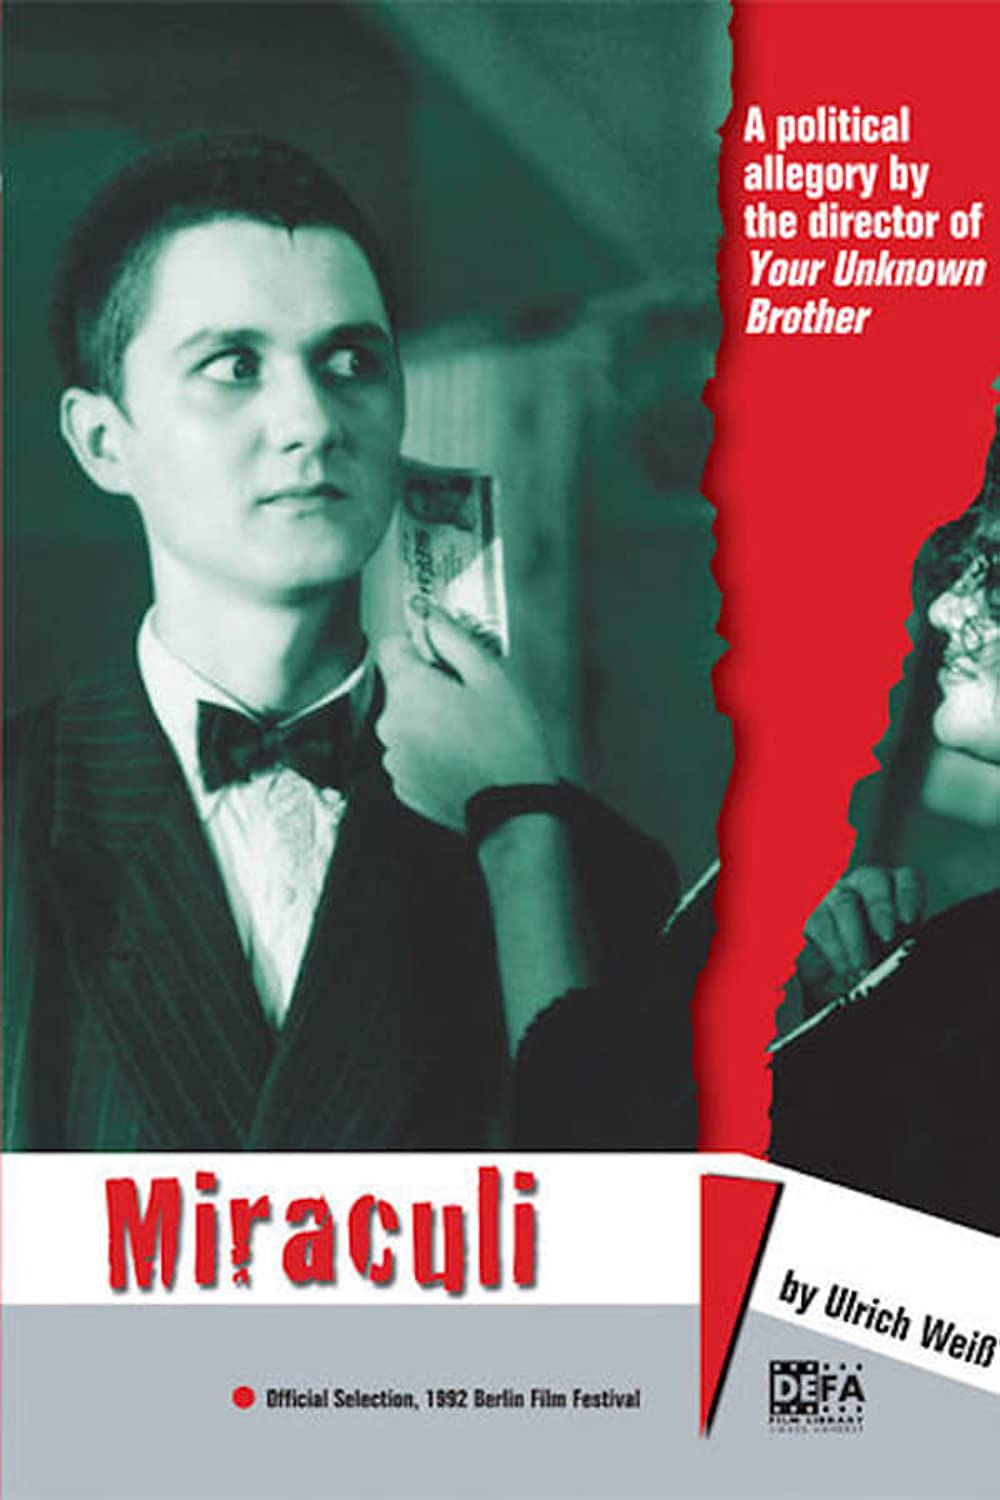 Filmbeschreibung zu Miraculi